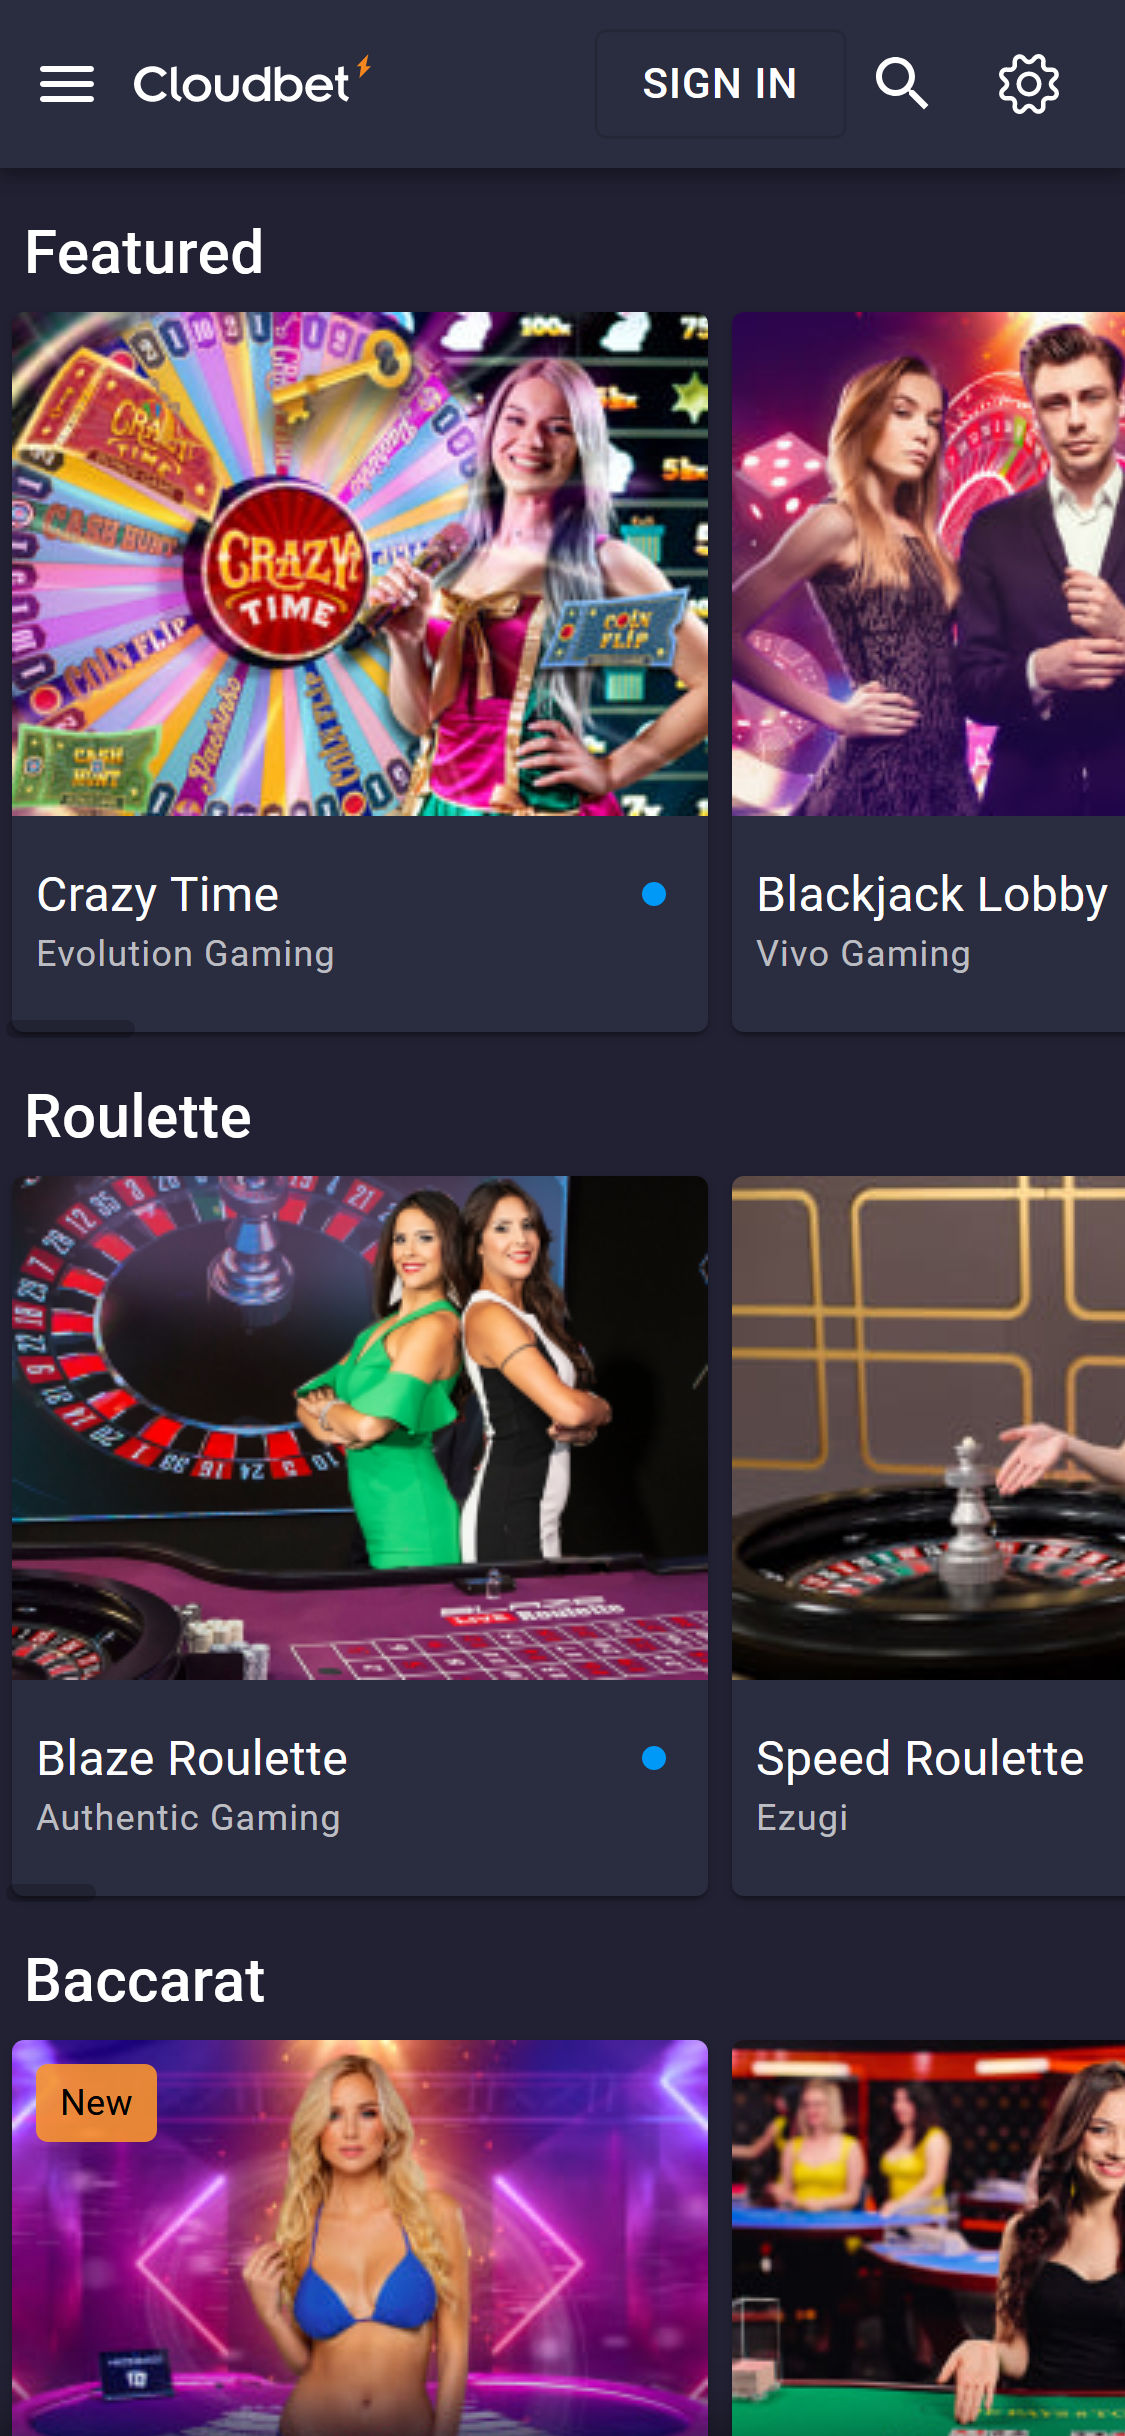 Cloudbet Casino Mobile Live Dealer Games Review